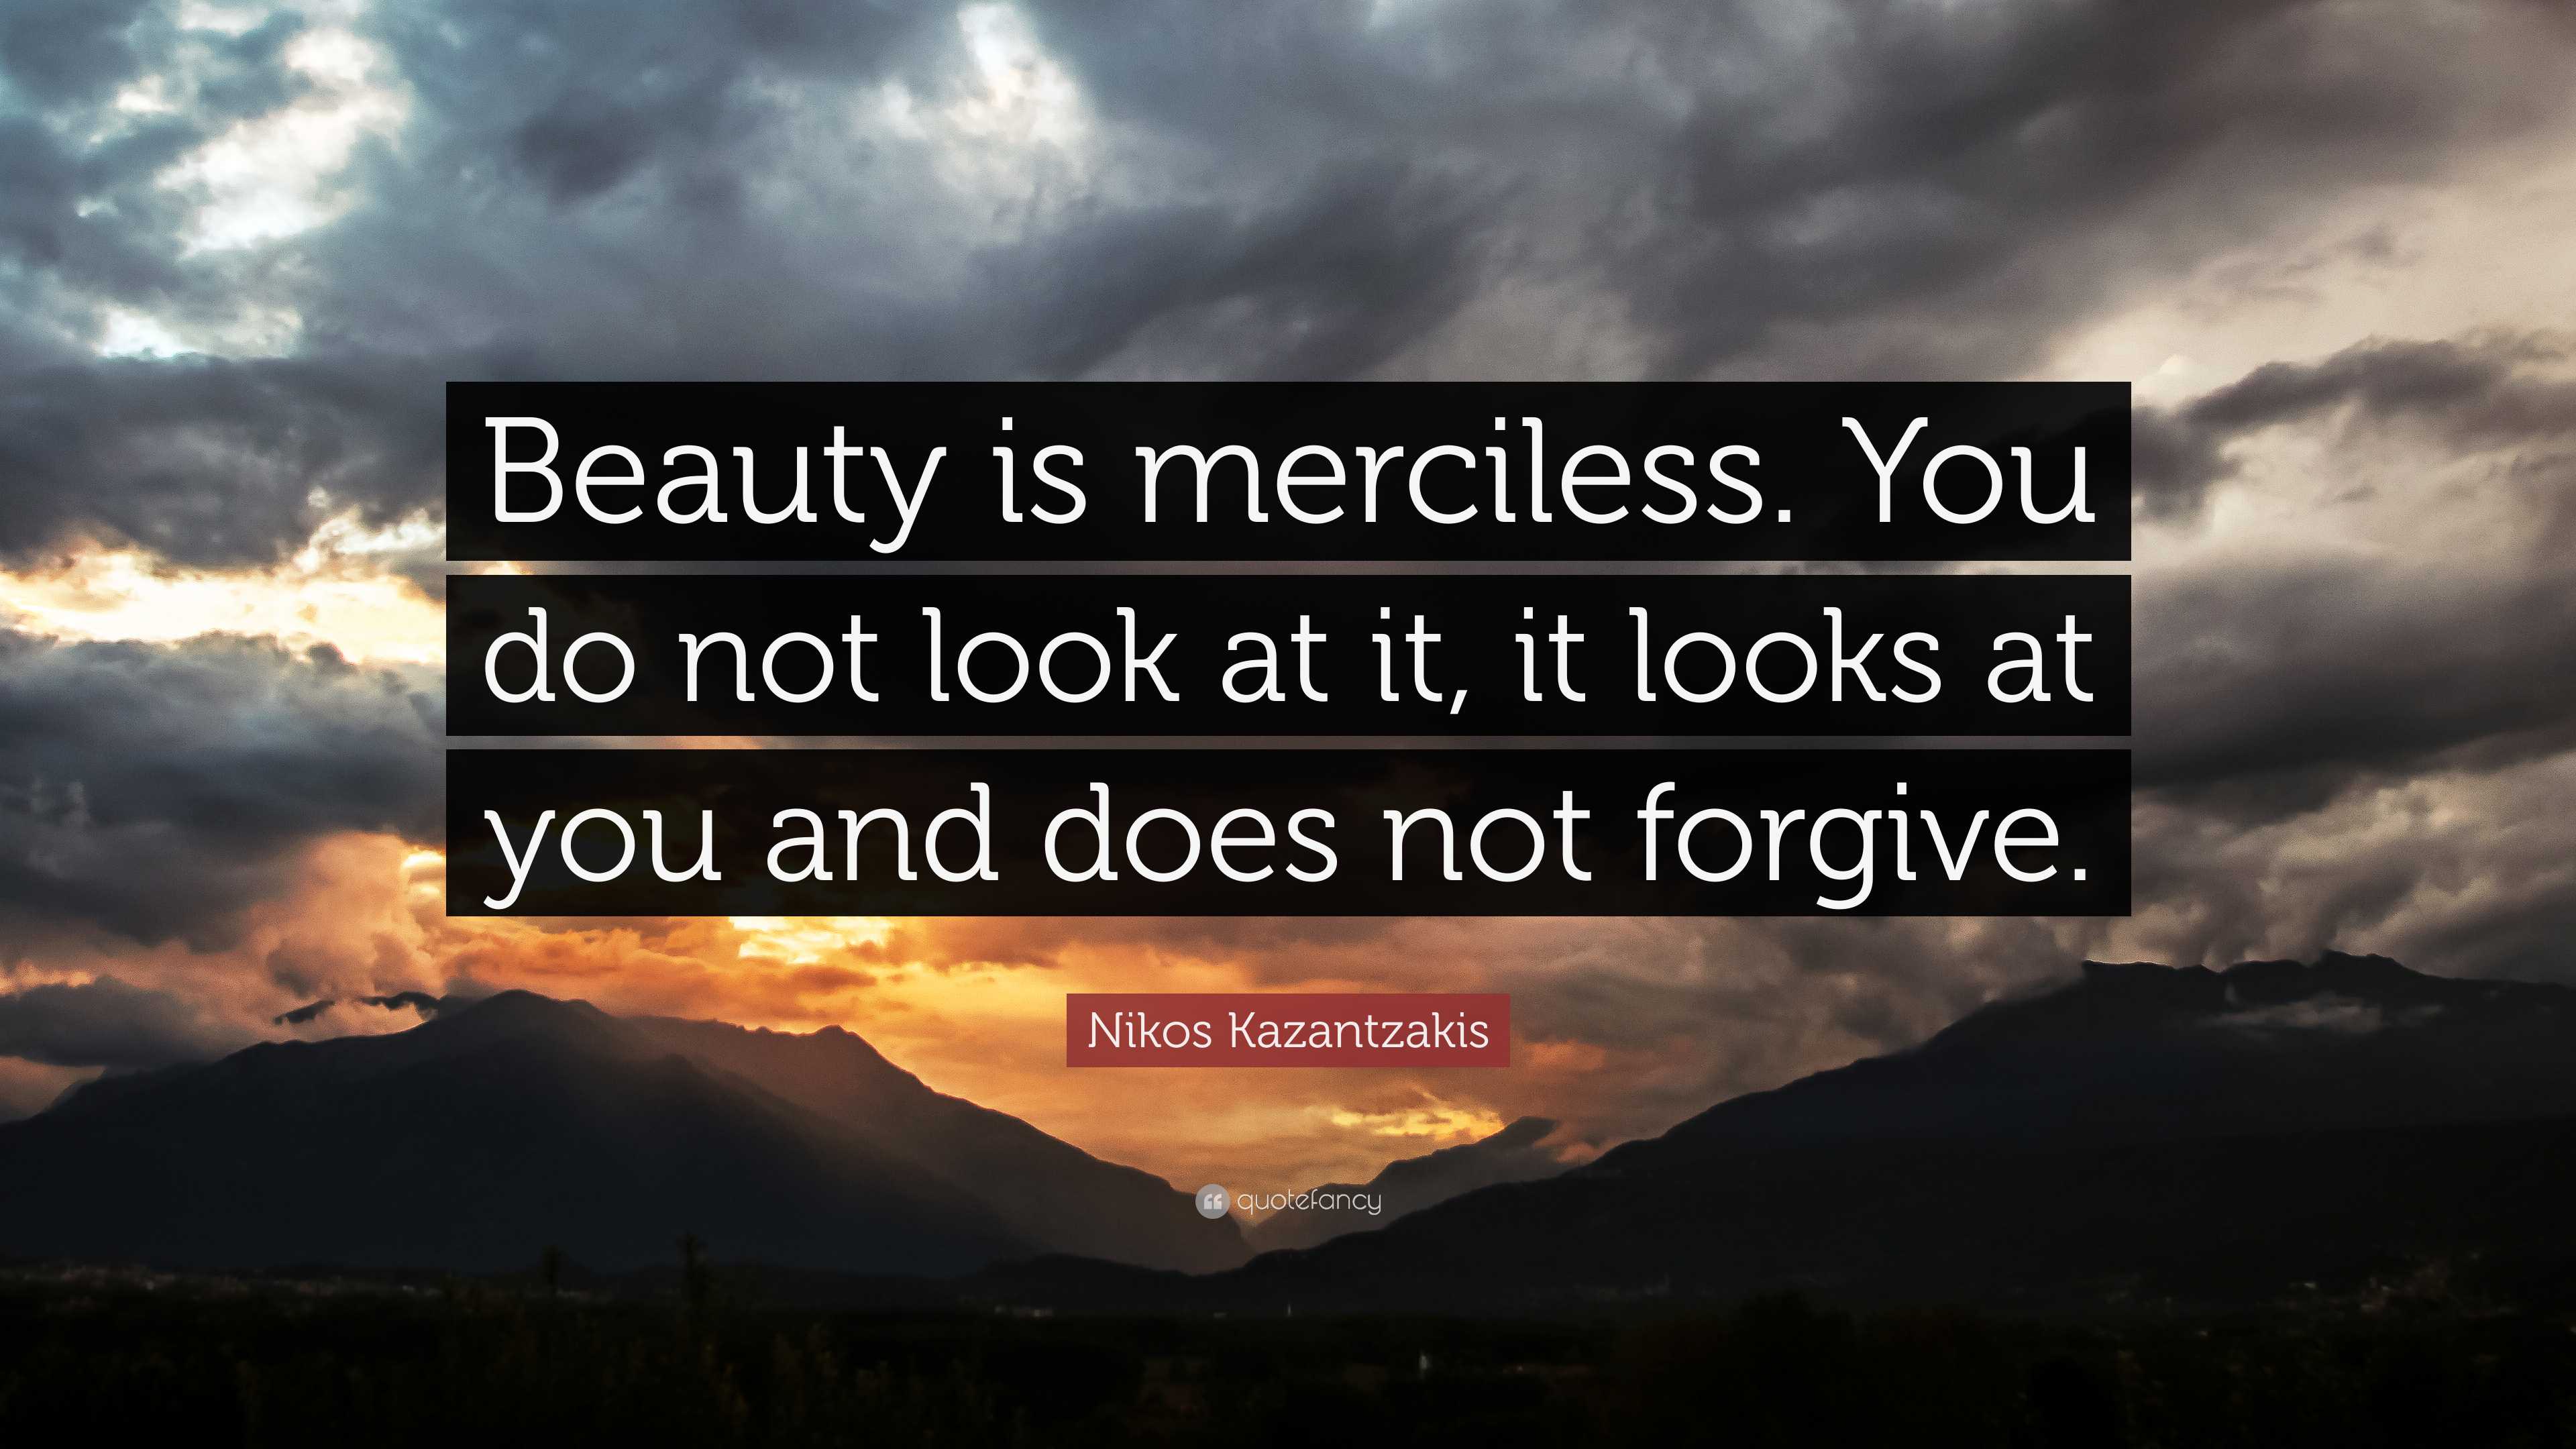 Nikos Kazantzakis Quote: “Beauty is merciless. You do not look at it ...